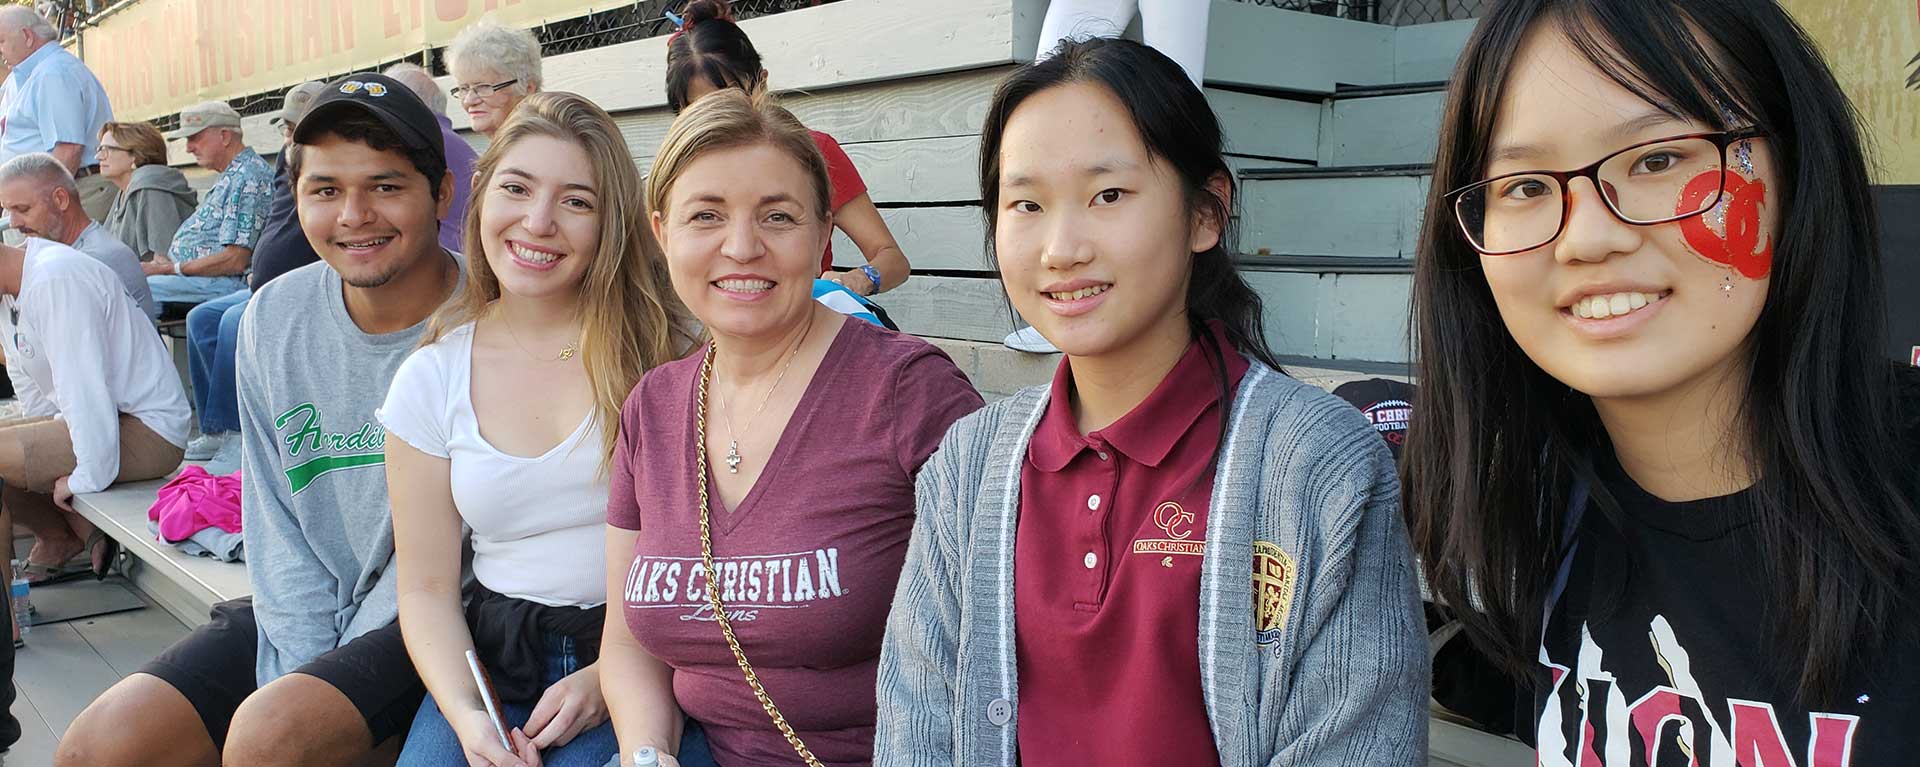 Top boarding schools in the U.S. Oaks Christian homestay program offers unique living options  